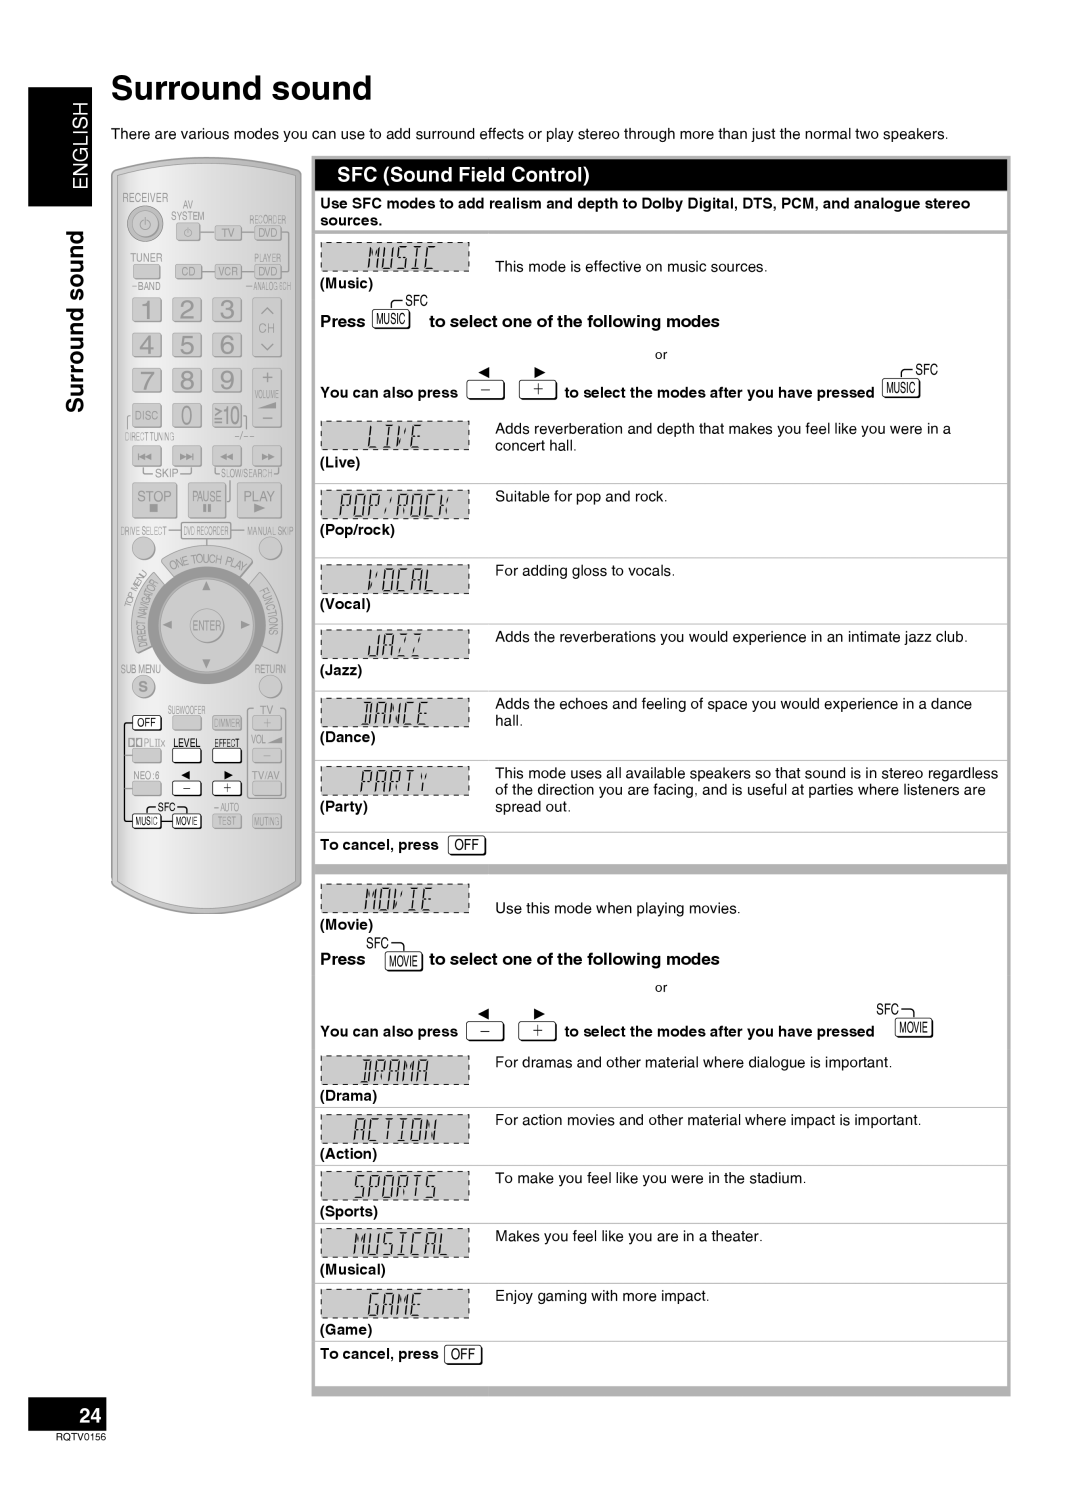 Panasonic SA-XR58 manual Surround sound, SFC Sound Field Control, English 